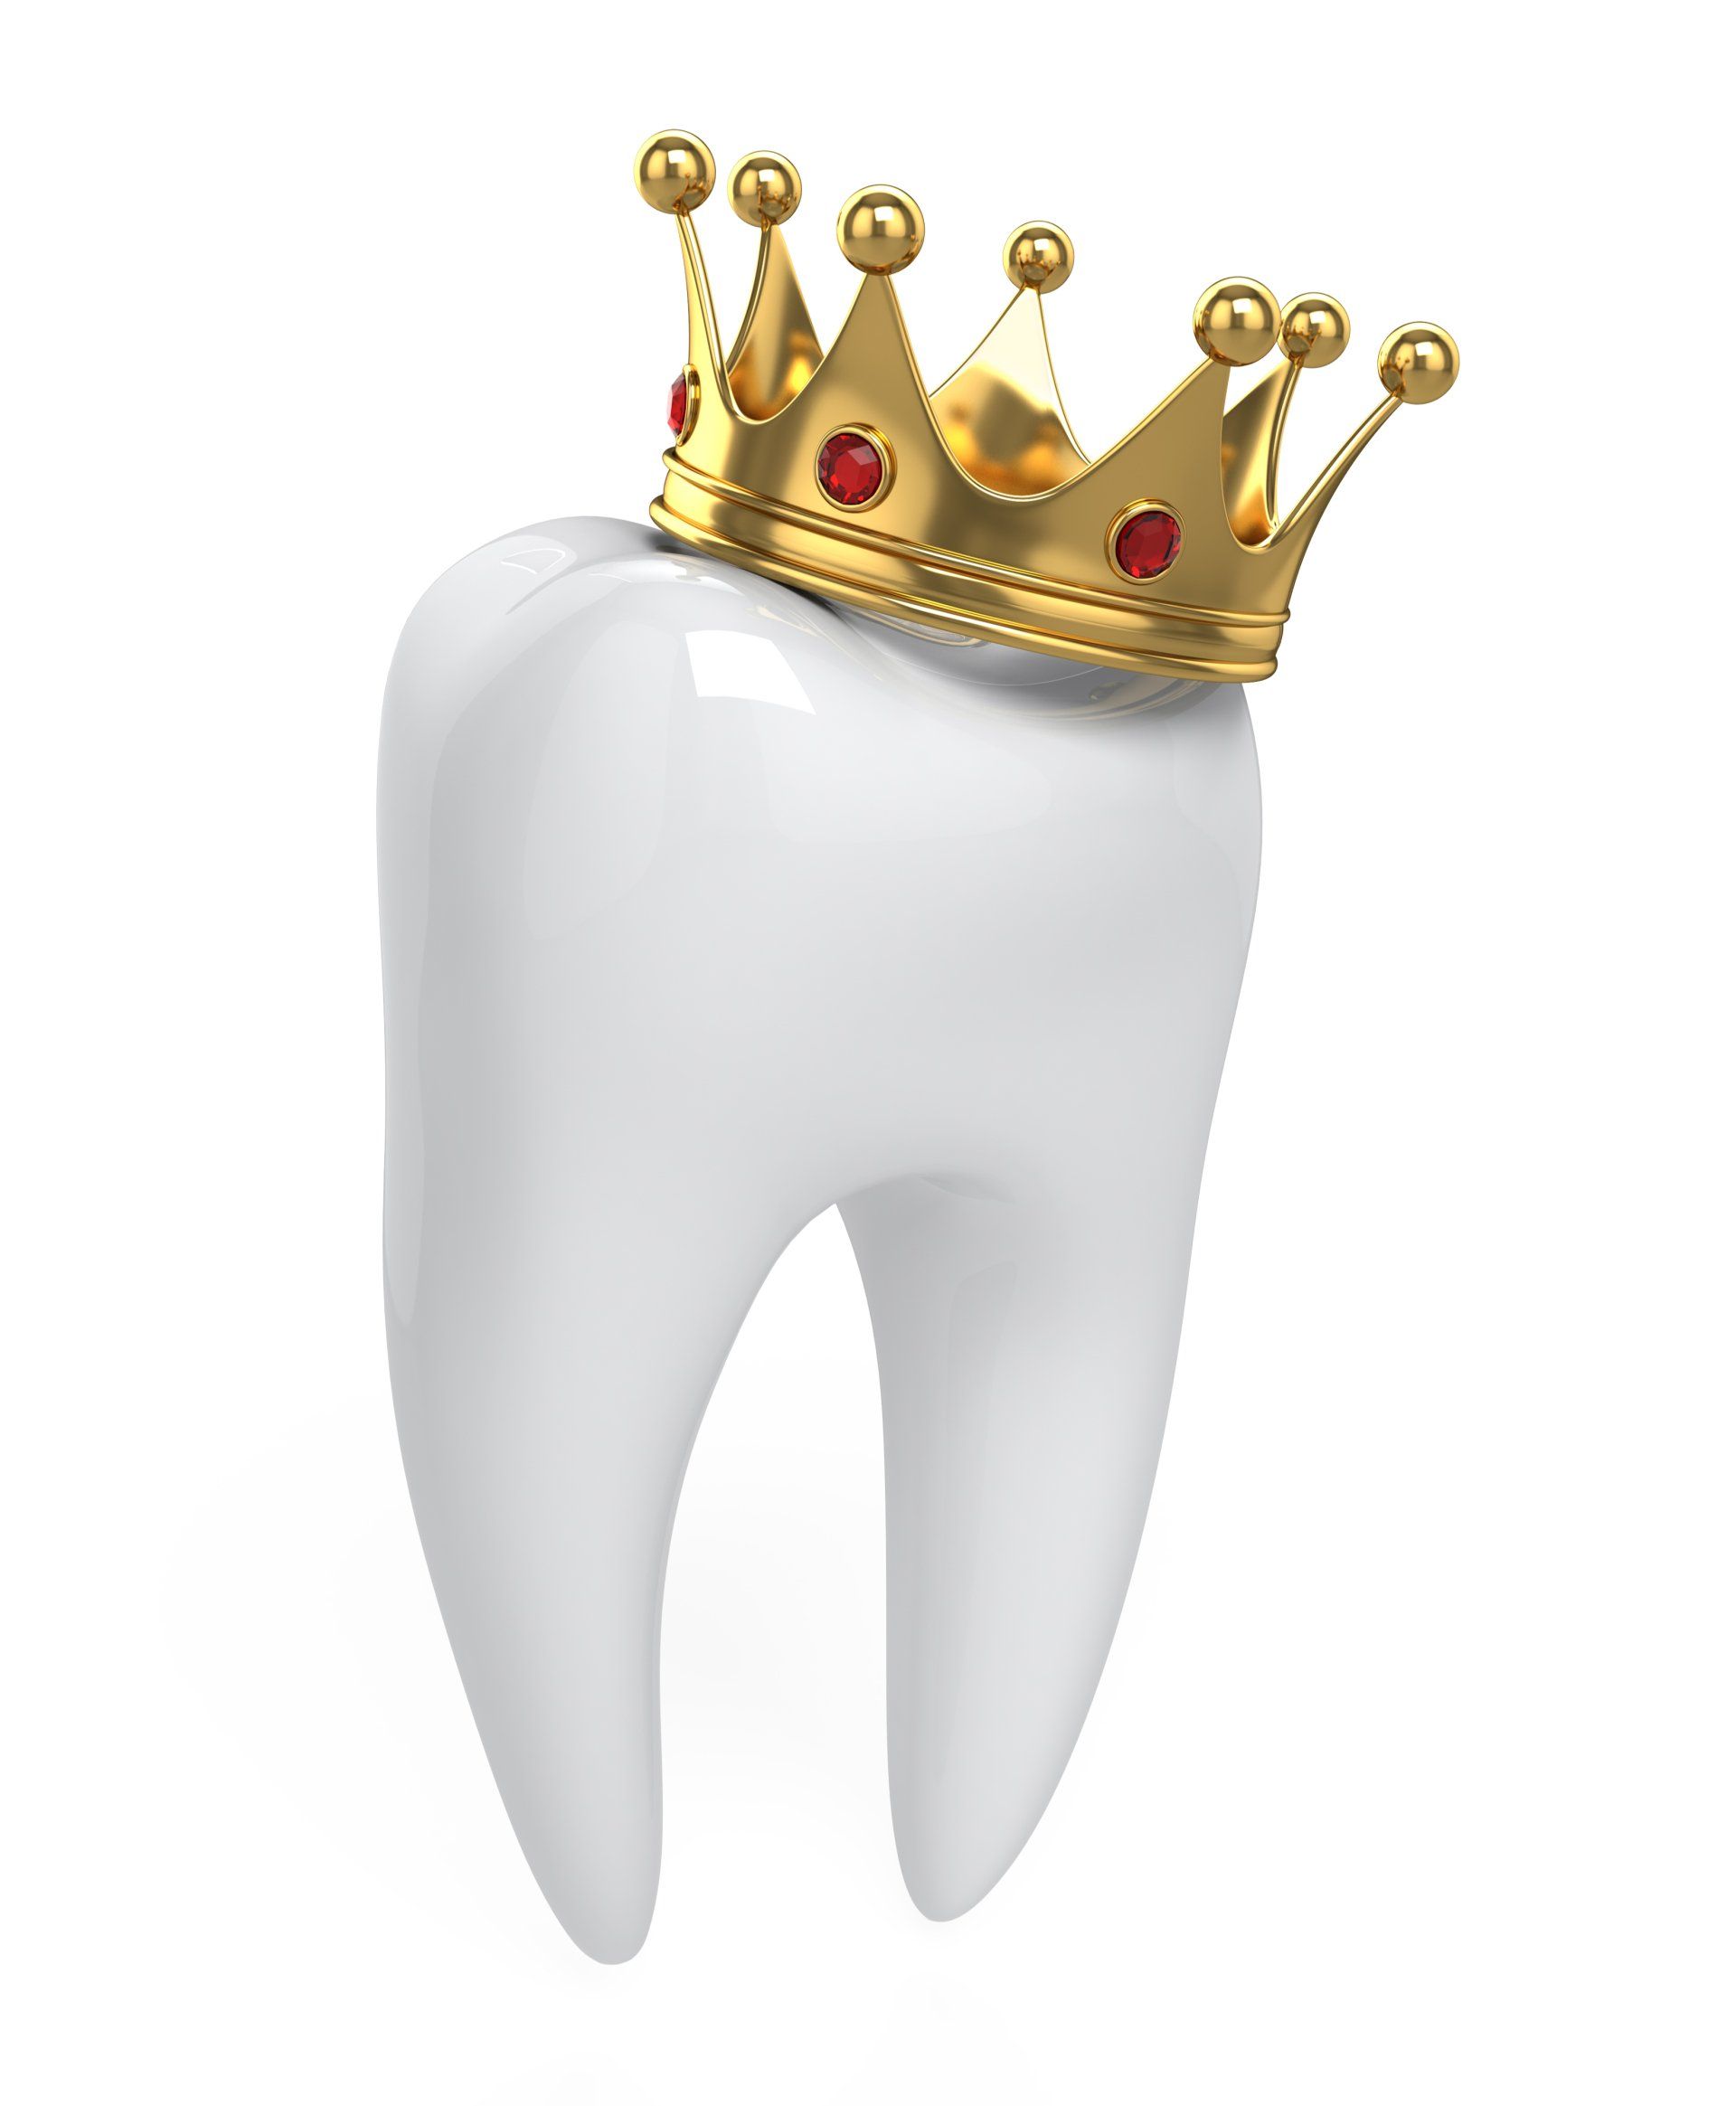 treating+crowned+tooth+pain-1920w.jpg